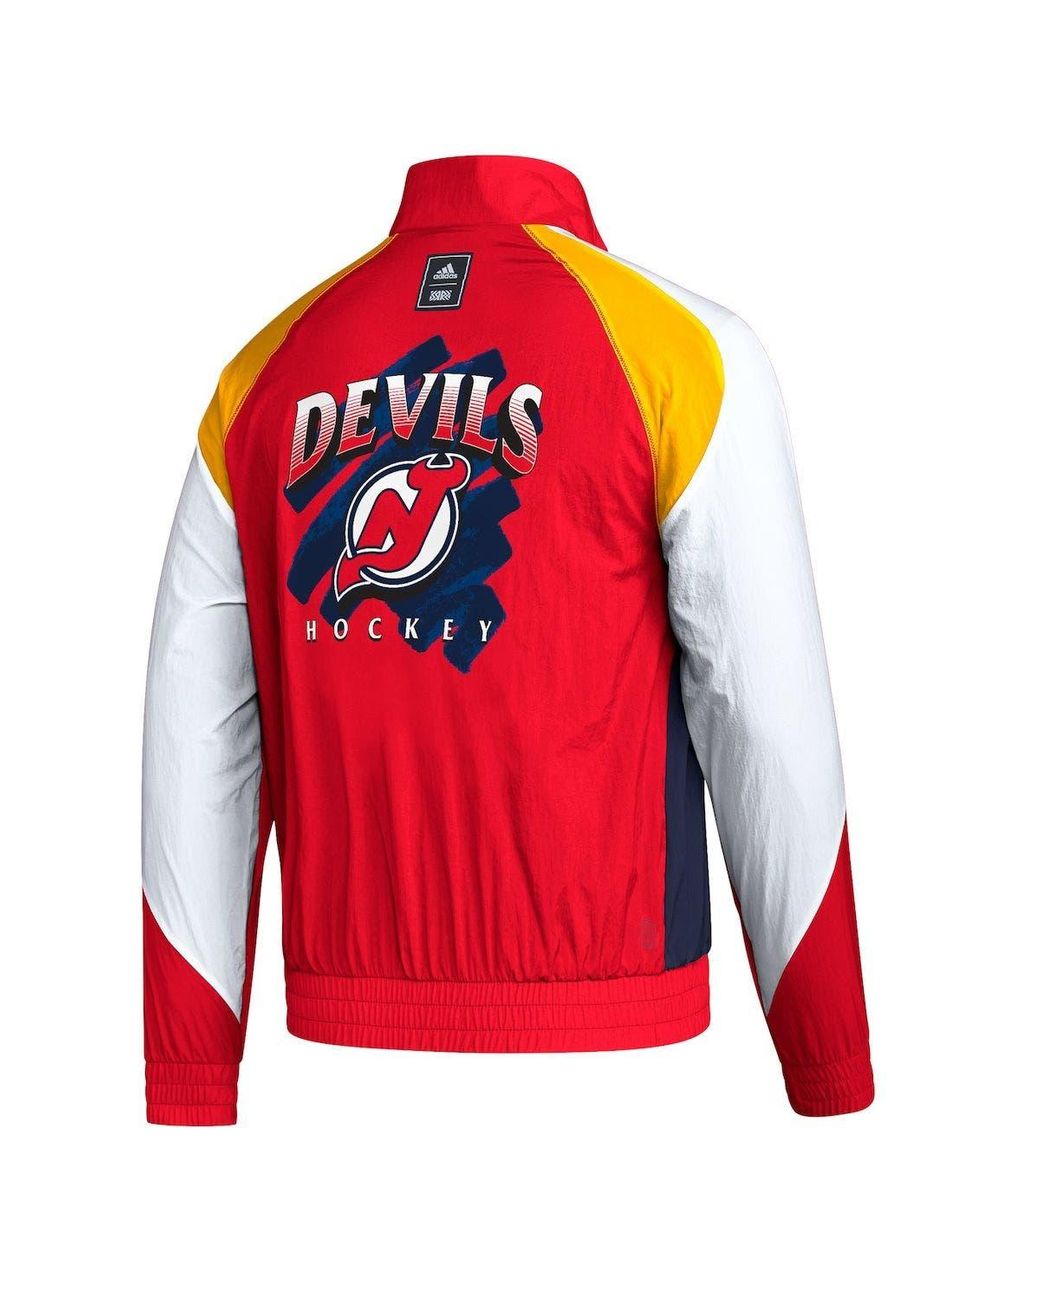 Devils reveal their new 'Reverse Retro' jerseys